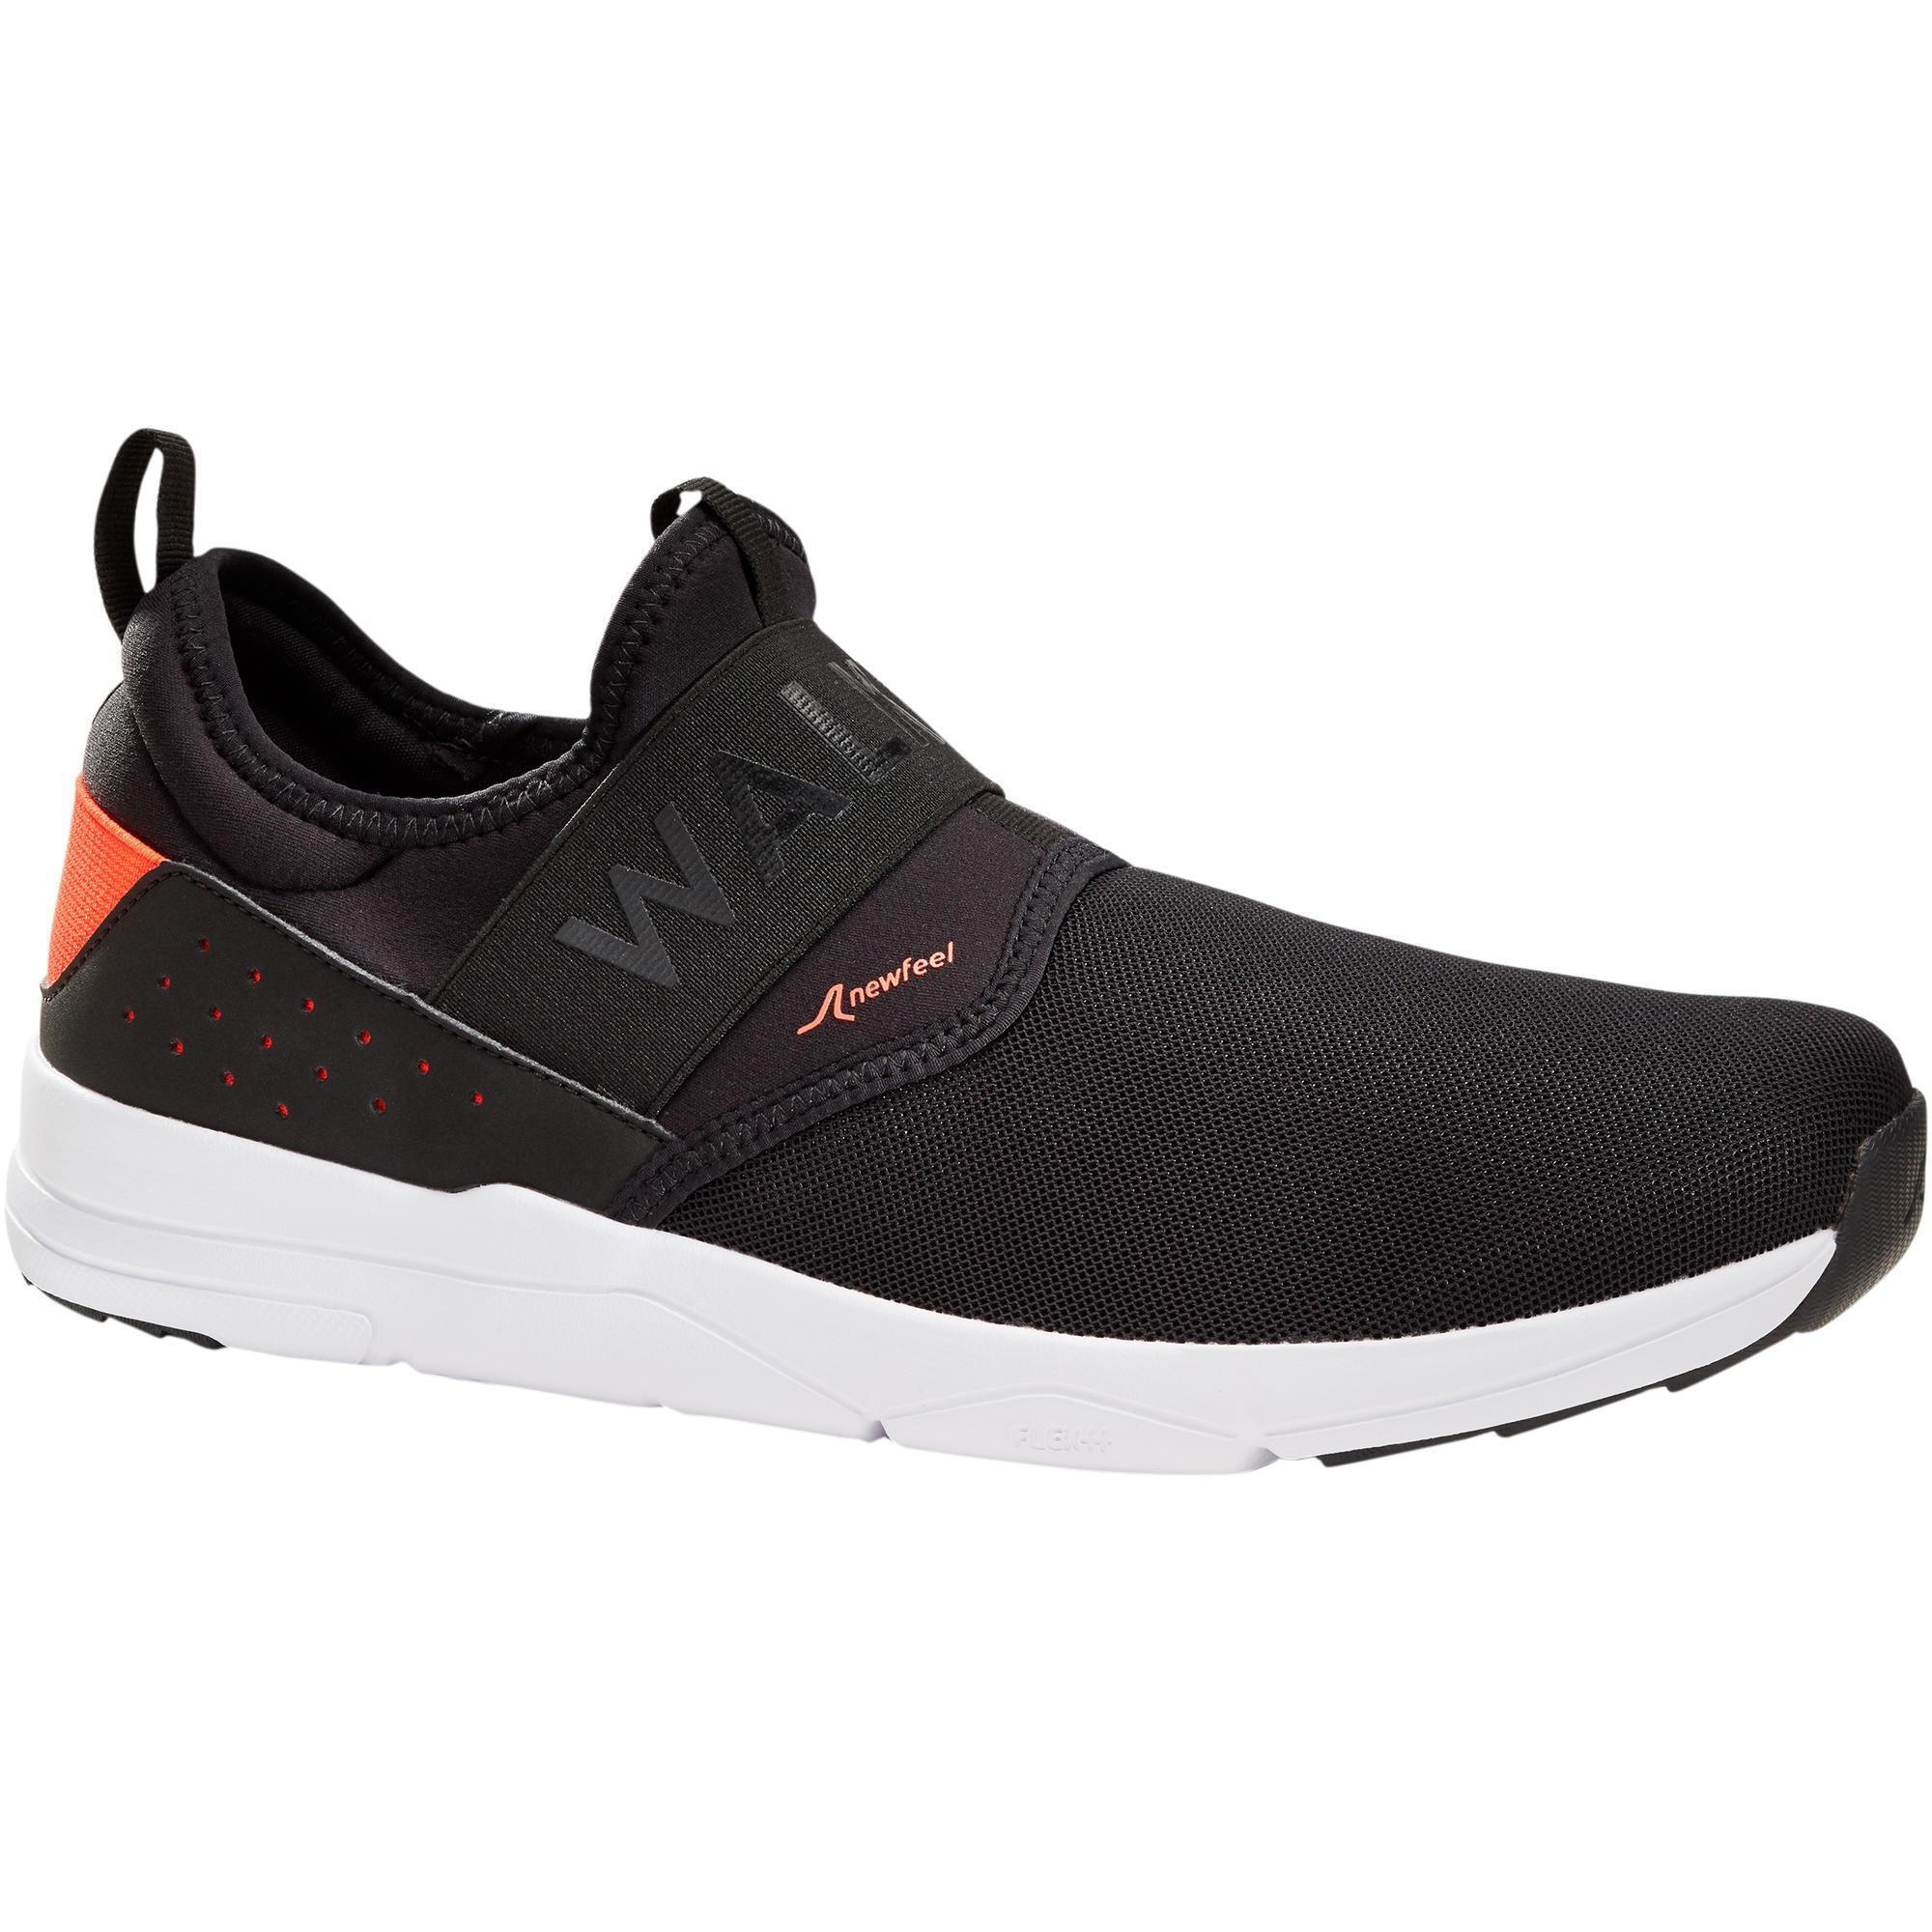 NEWFEEL PW 160 Slip-On Men's Urban Walking Shoes - Black/Orange